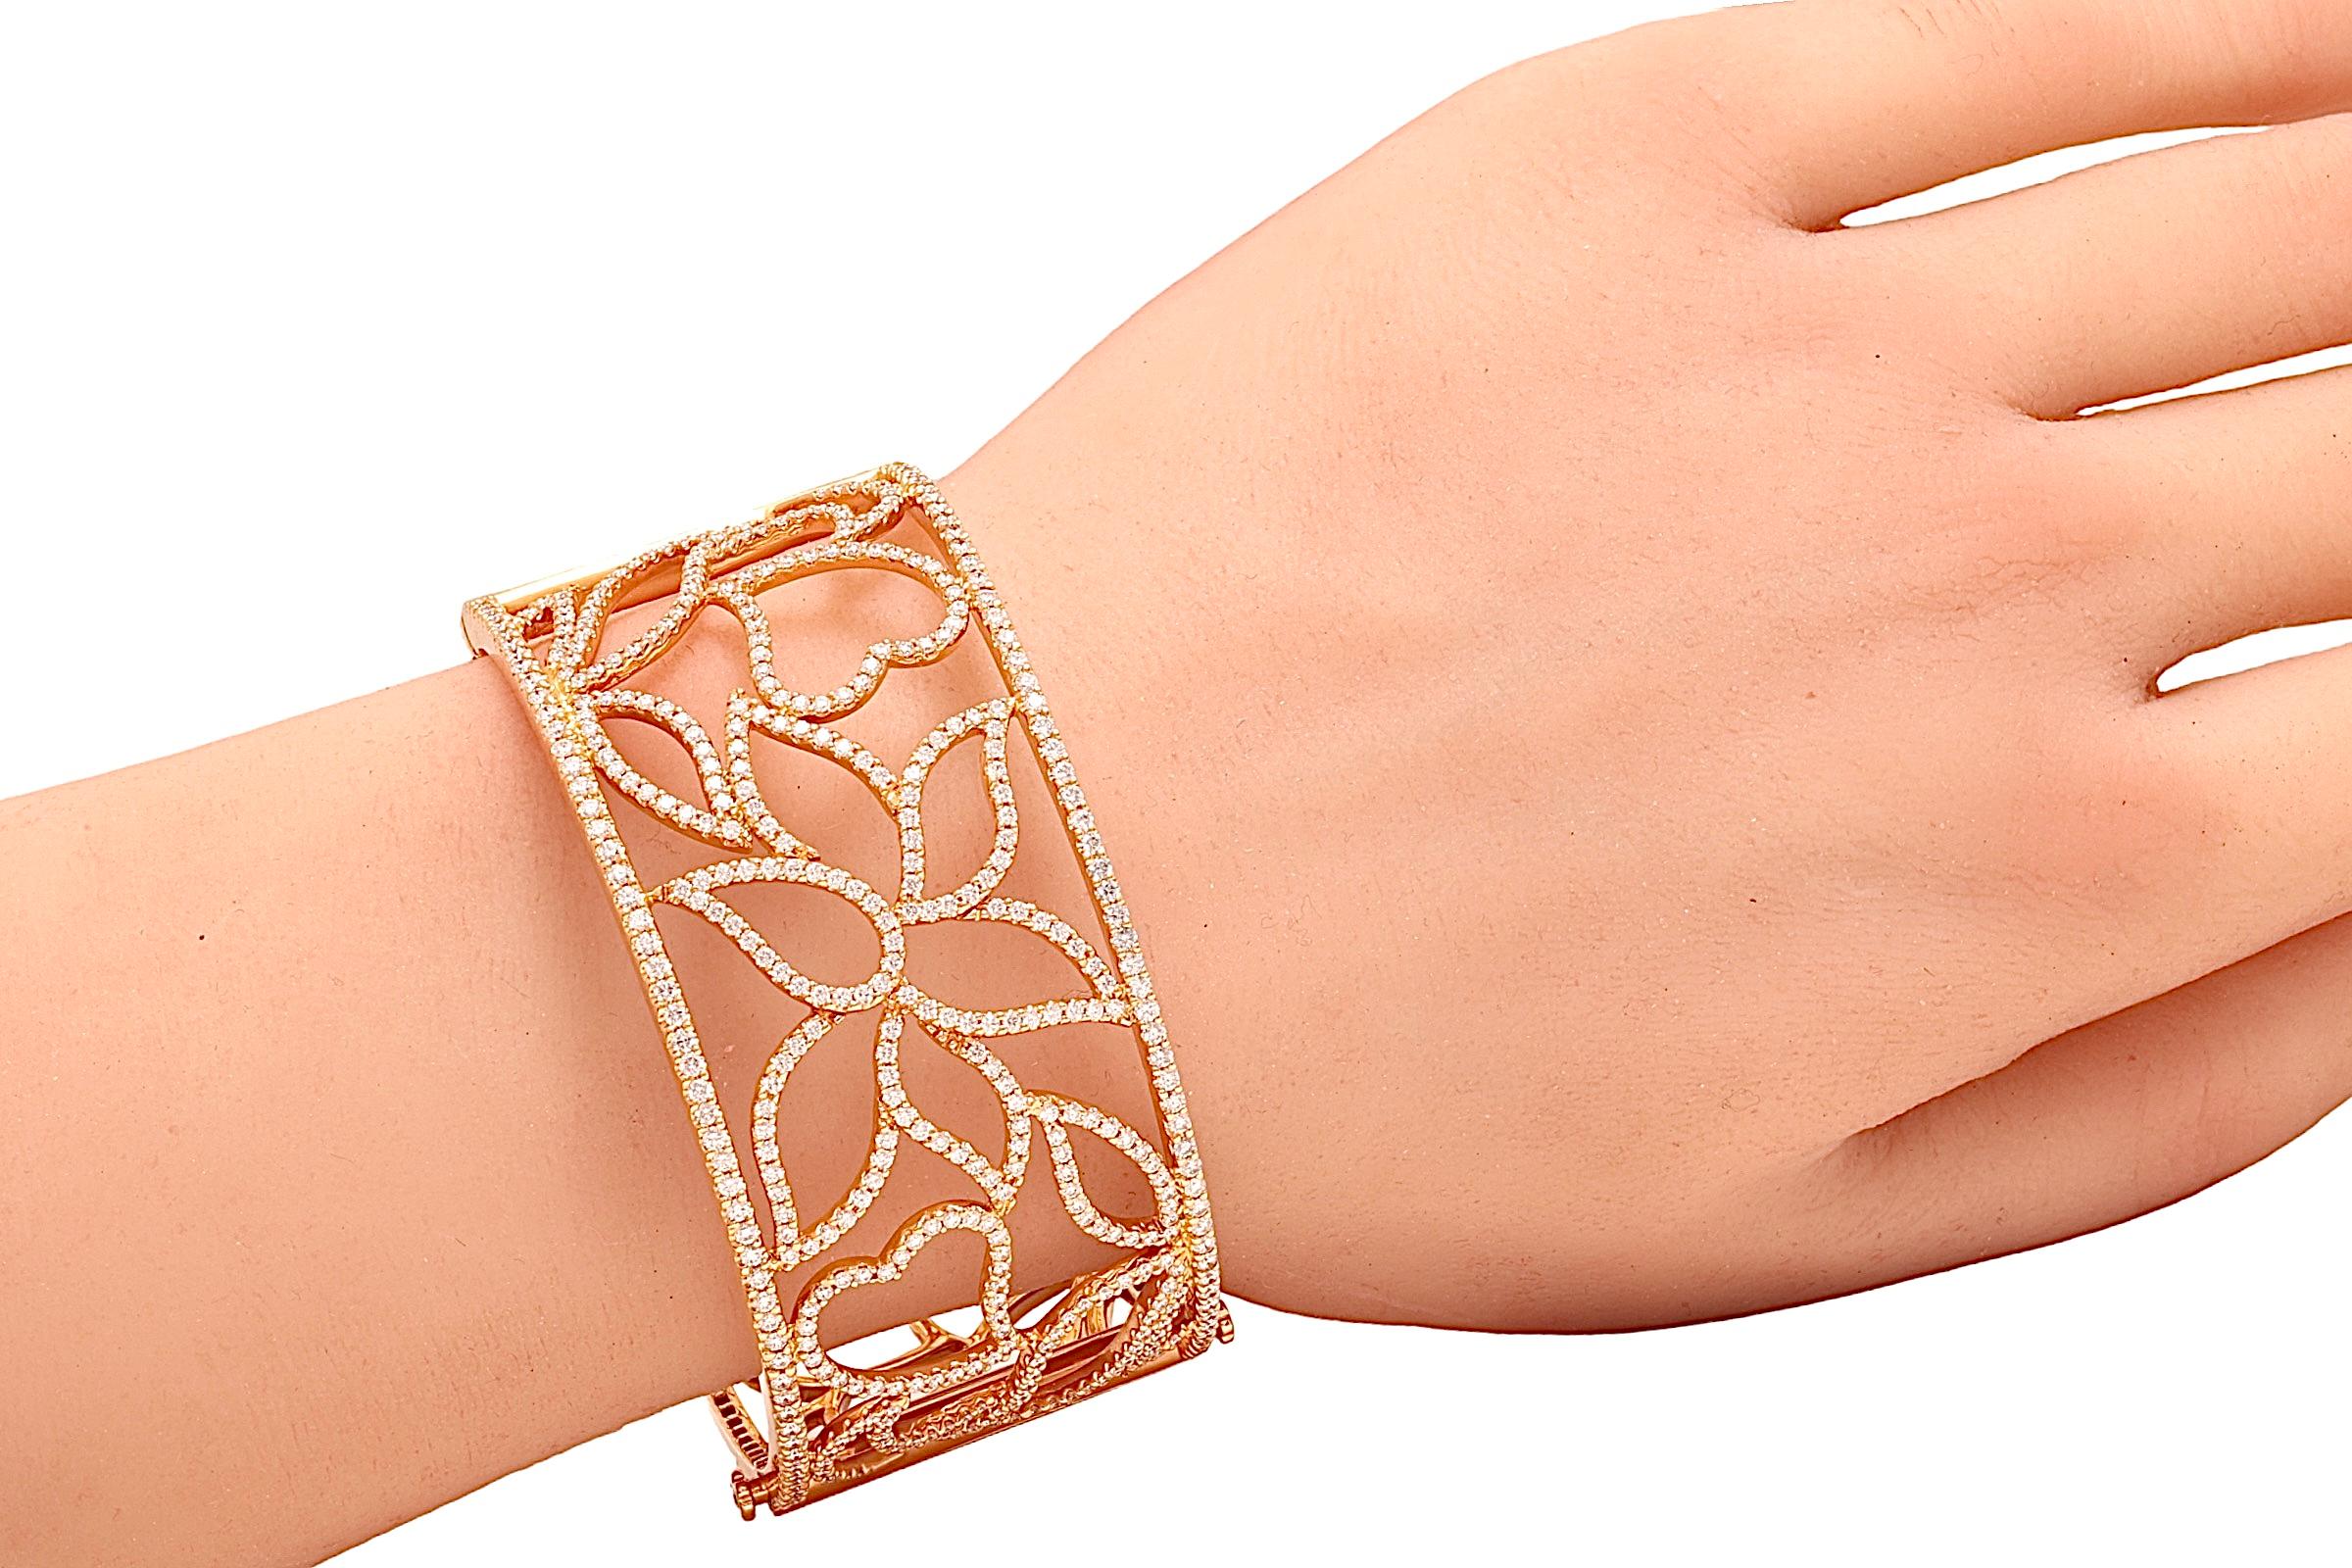 18kt Pink Gold Cuff Bracelet, Flower Design, set with 5.87 ct. Diamonds, 2 Sided For Sale 11